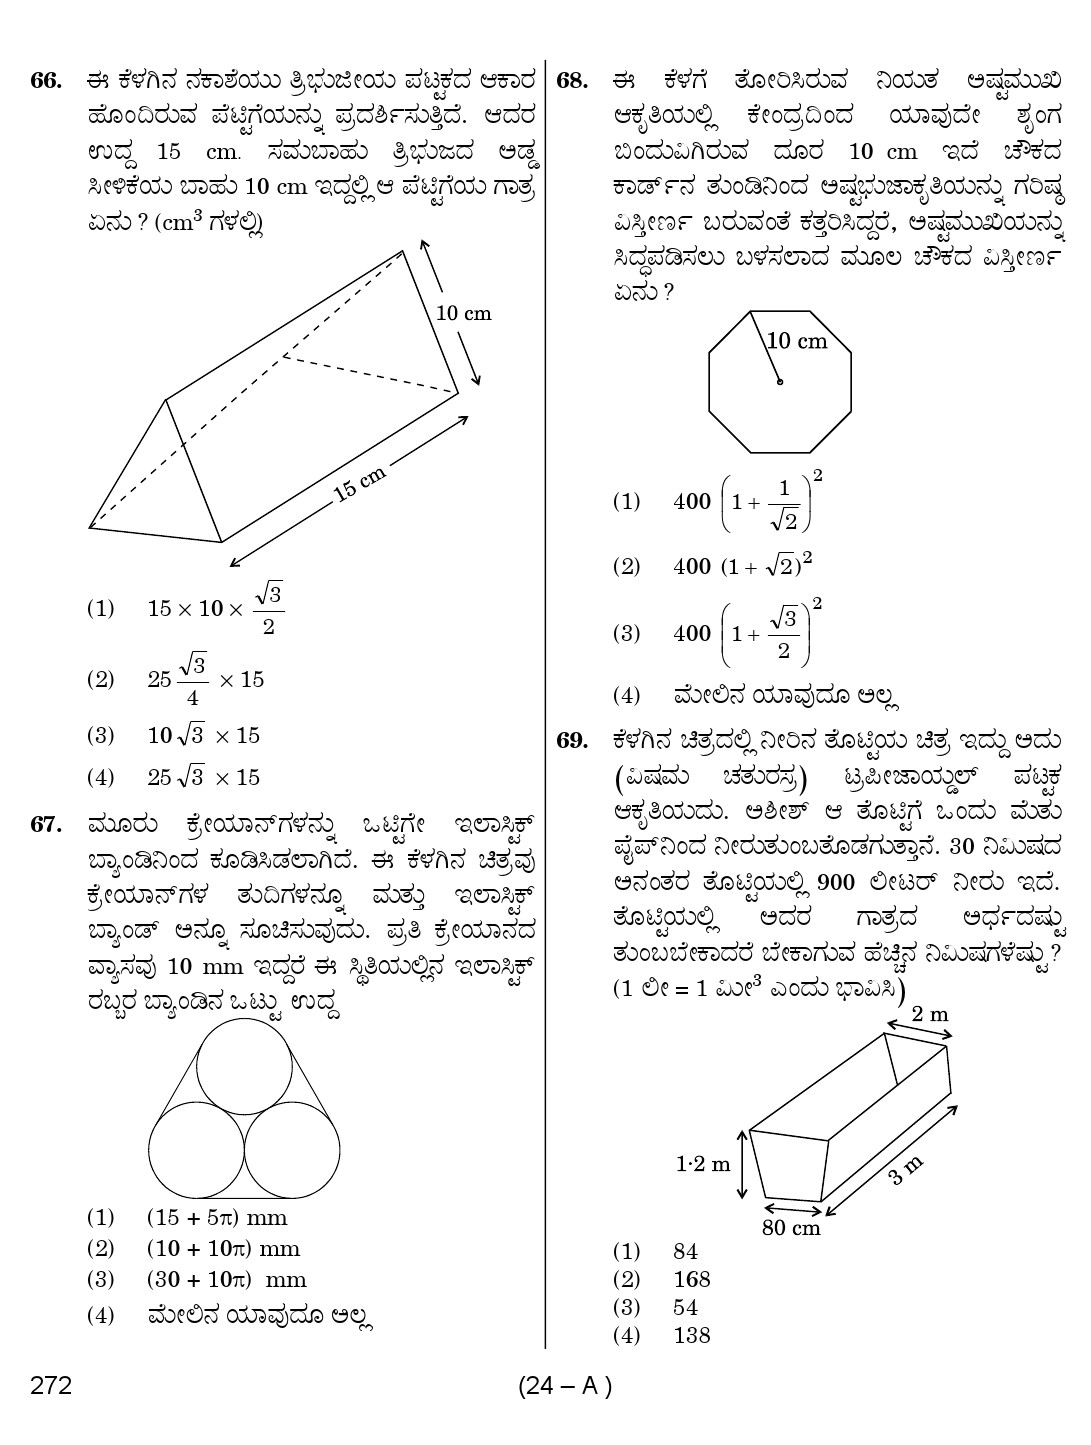 Karnataka PSC Mathematics Teacher Exam Sample Question Paper Subject code 272 24